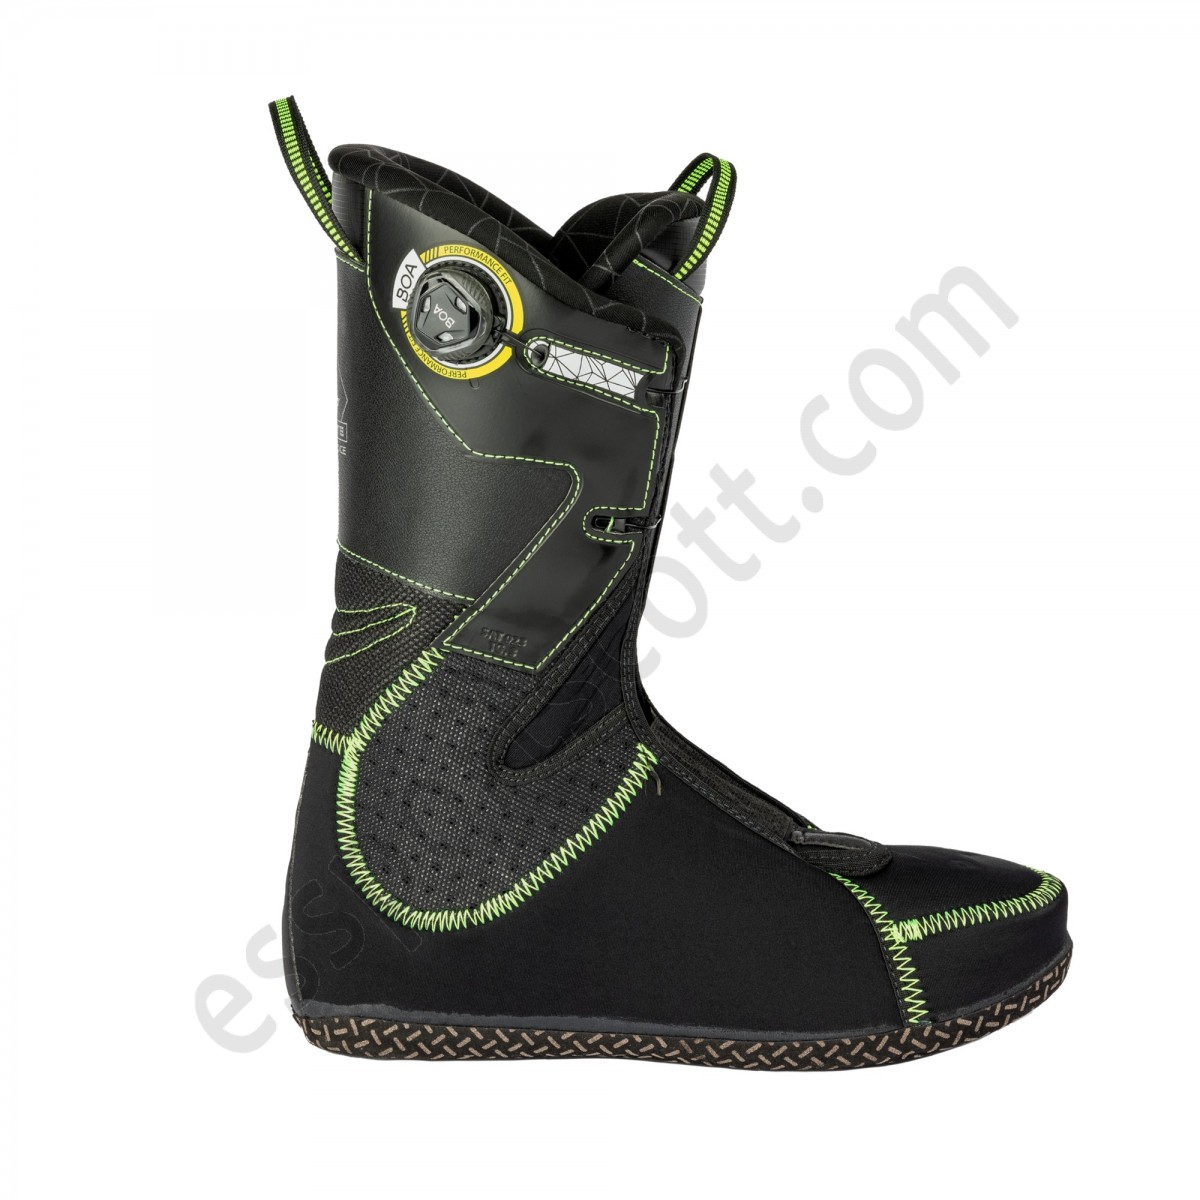 Scott Tienda ◇ Cosmos Pro Ski Boot - -4